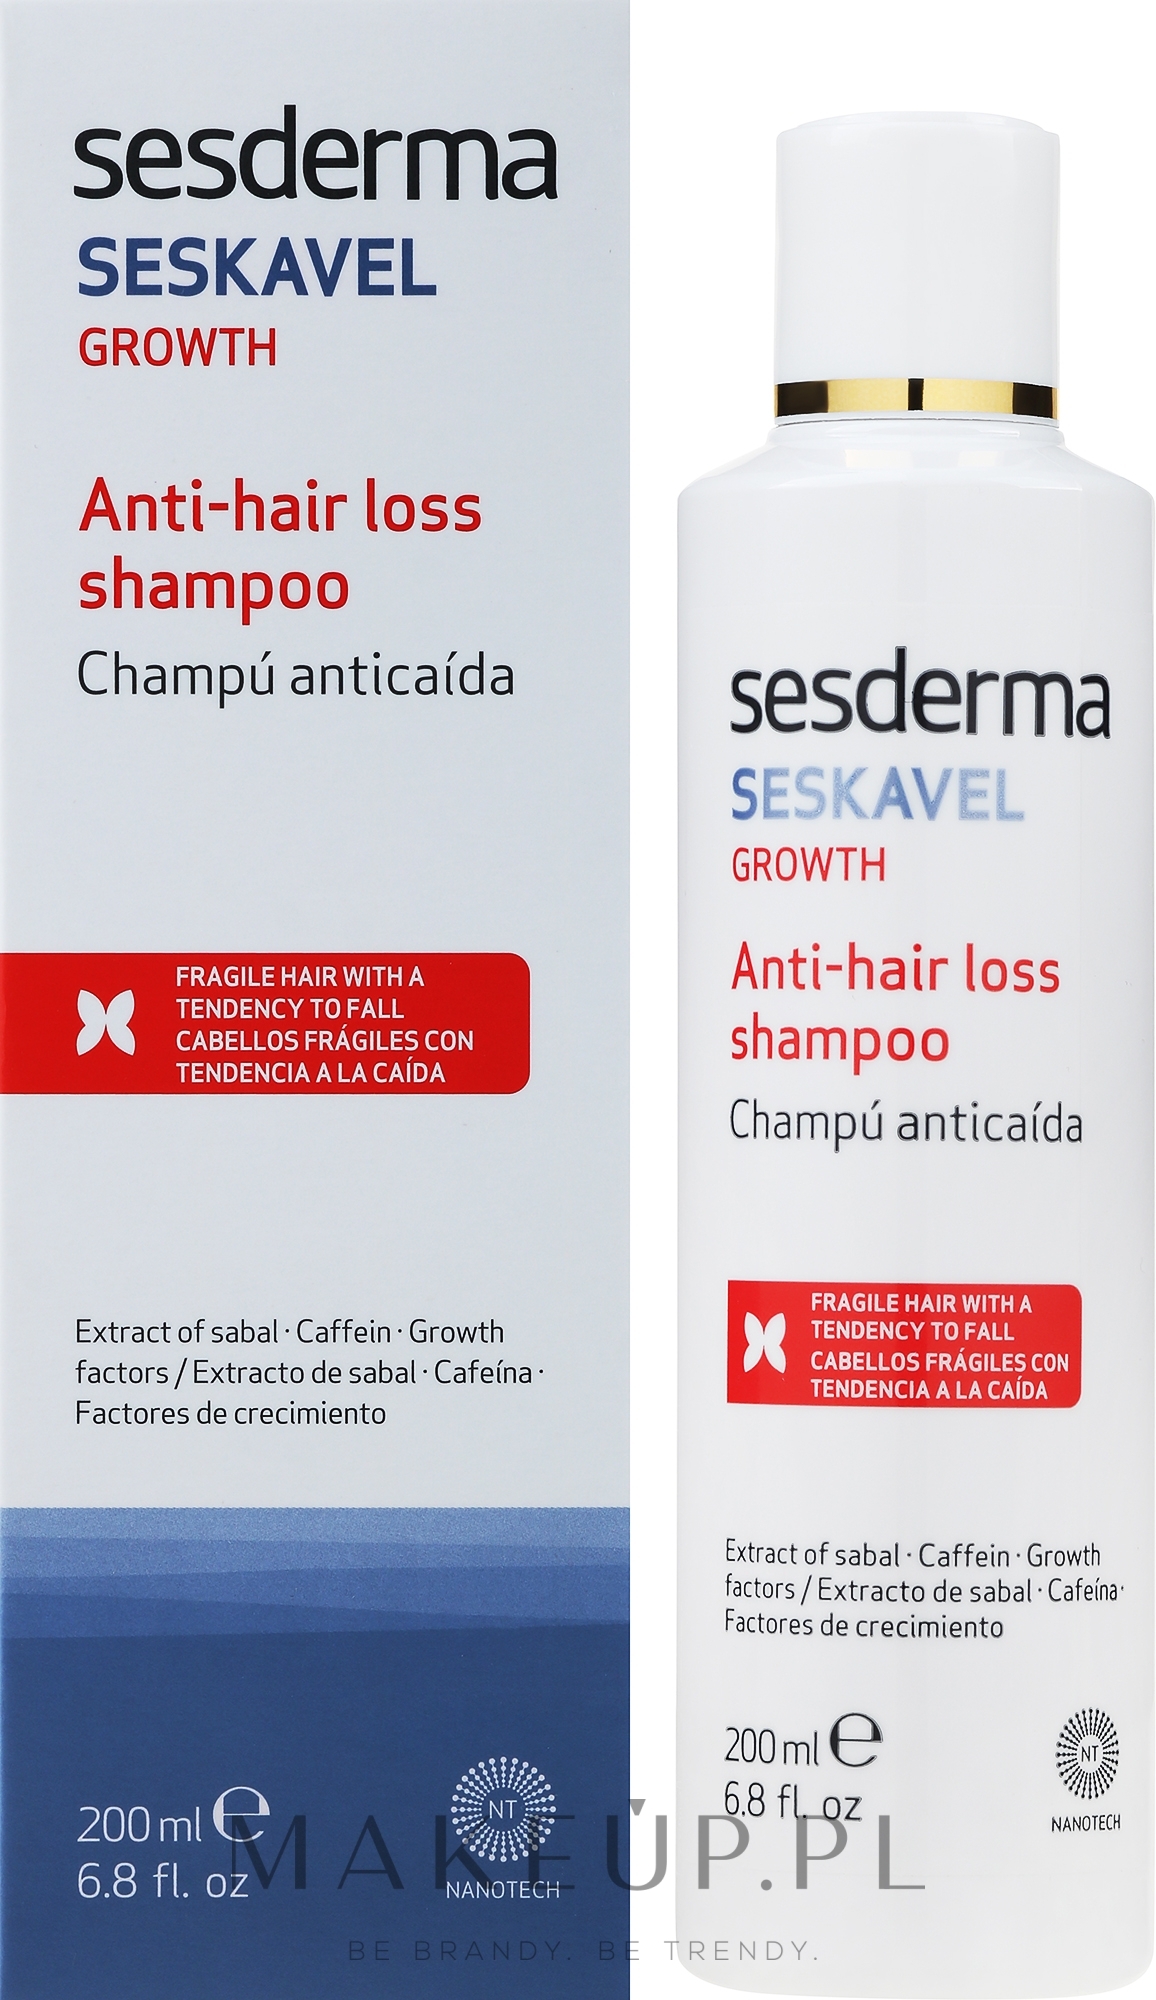 sesderma seskavel anti-hair loss szampon